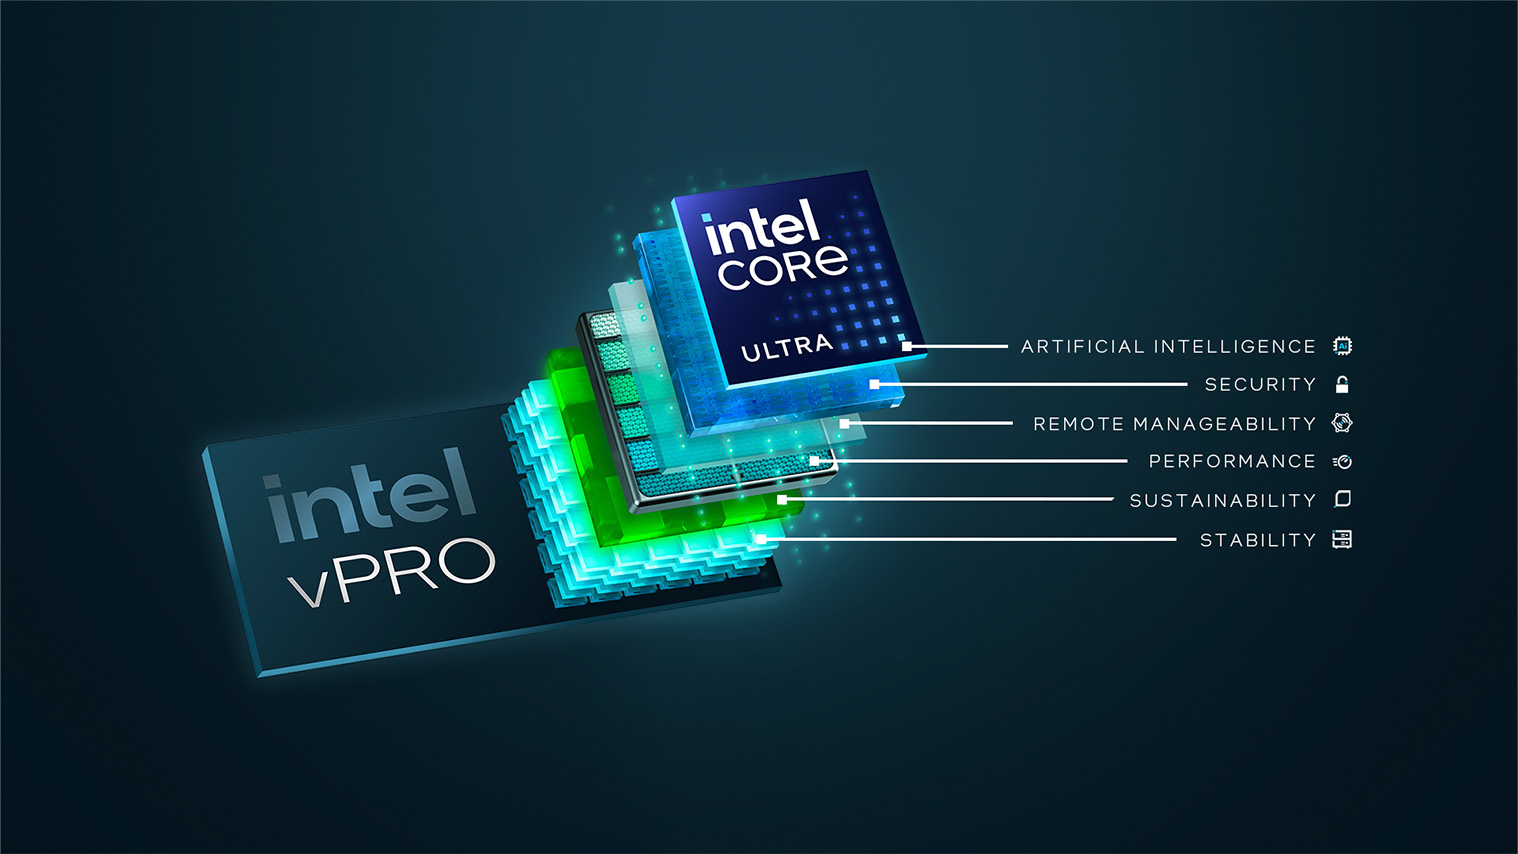 Intel VPro